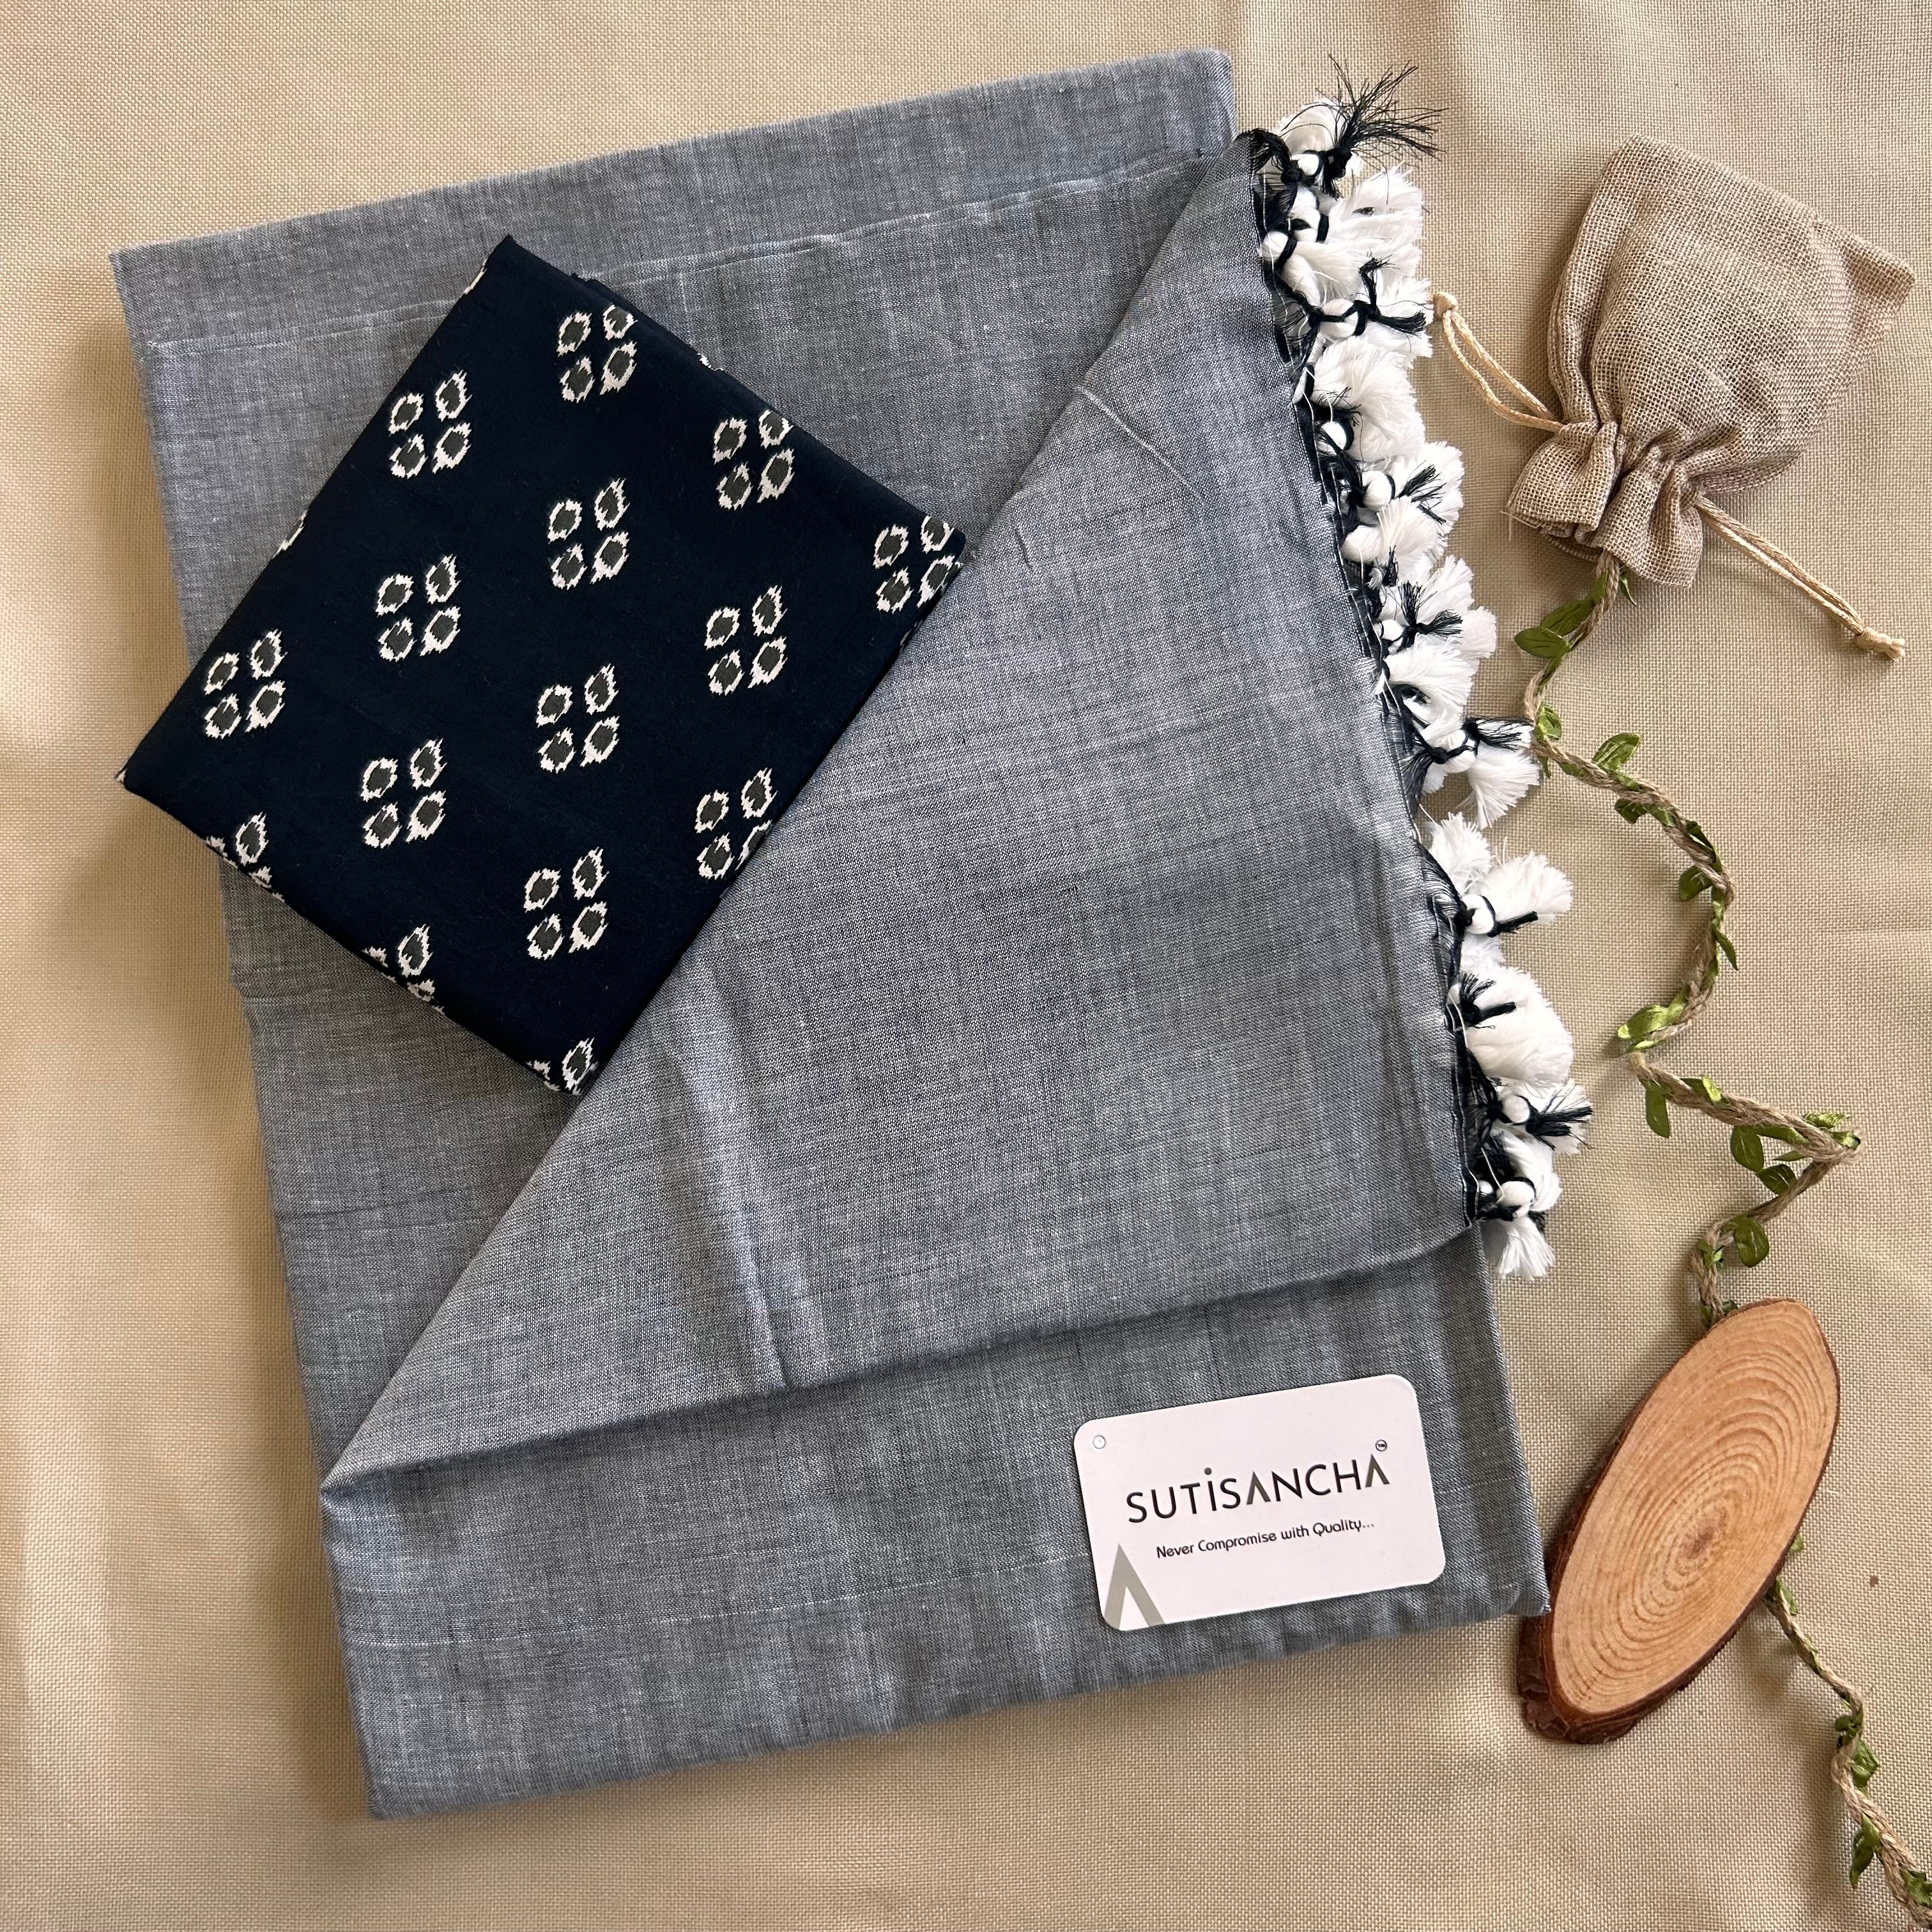 Sutisancha Grey Handloom Cotton Saree & Designer Blouse